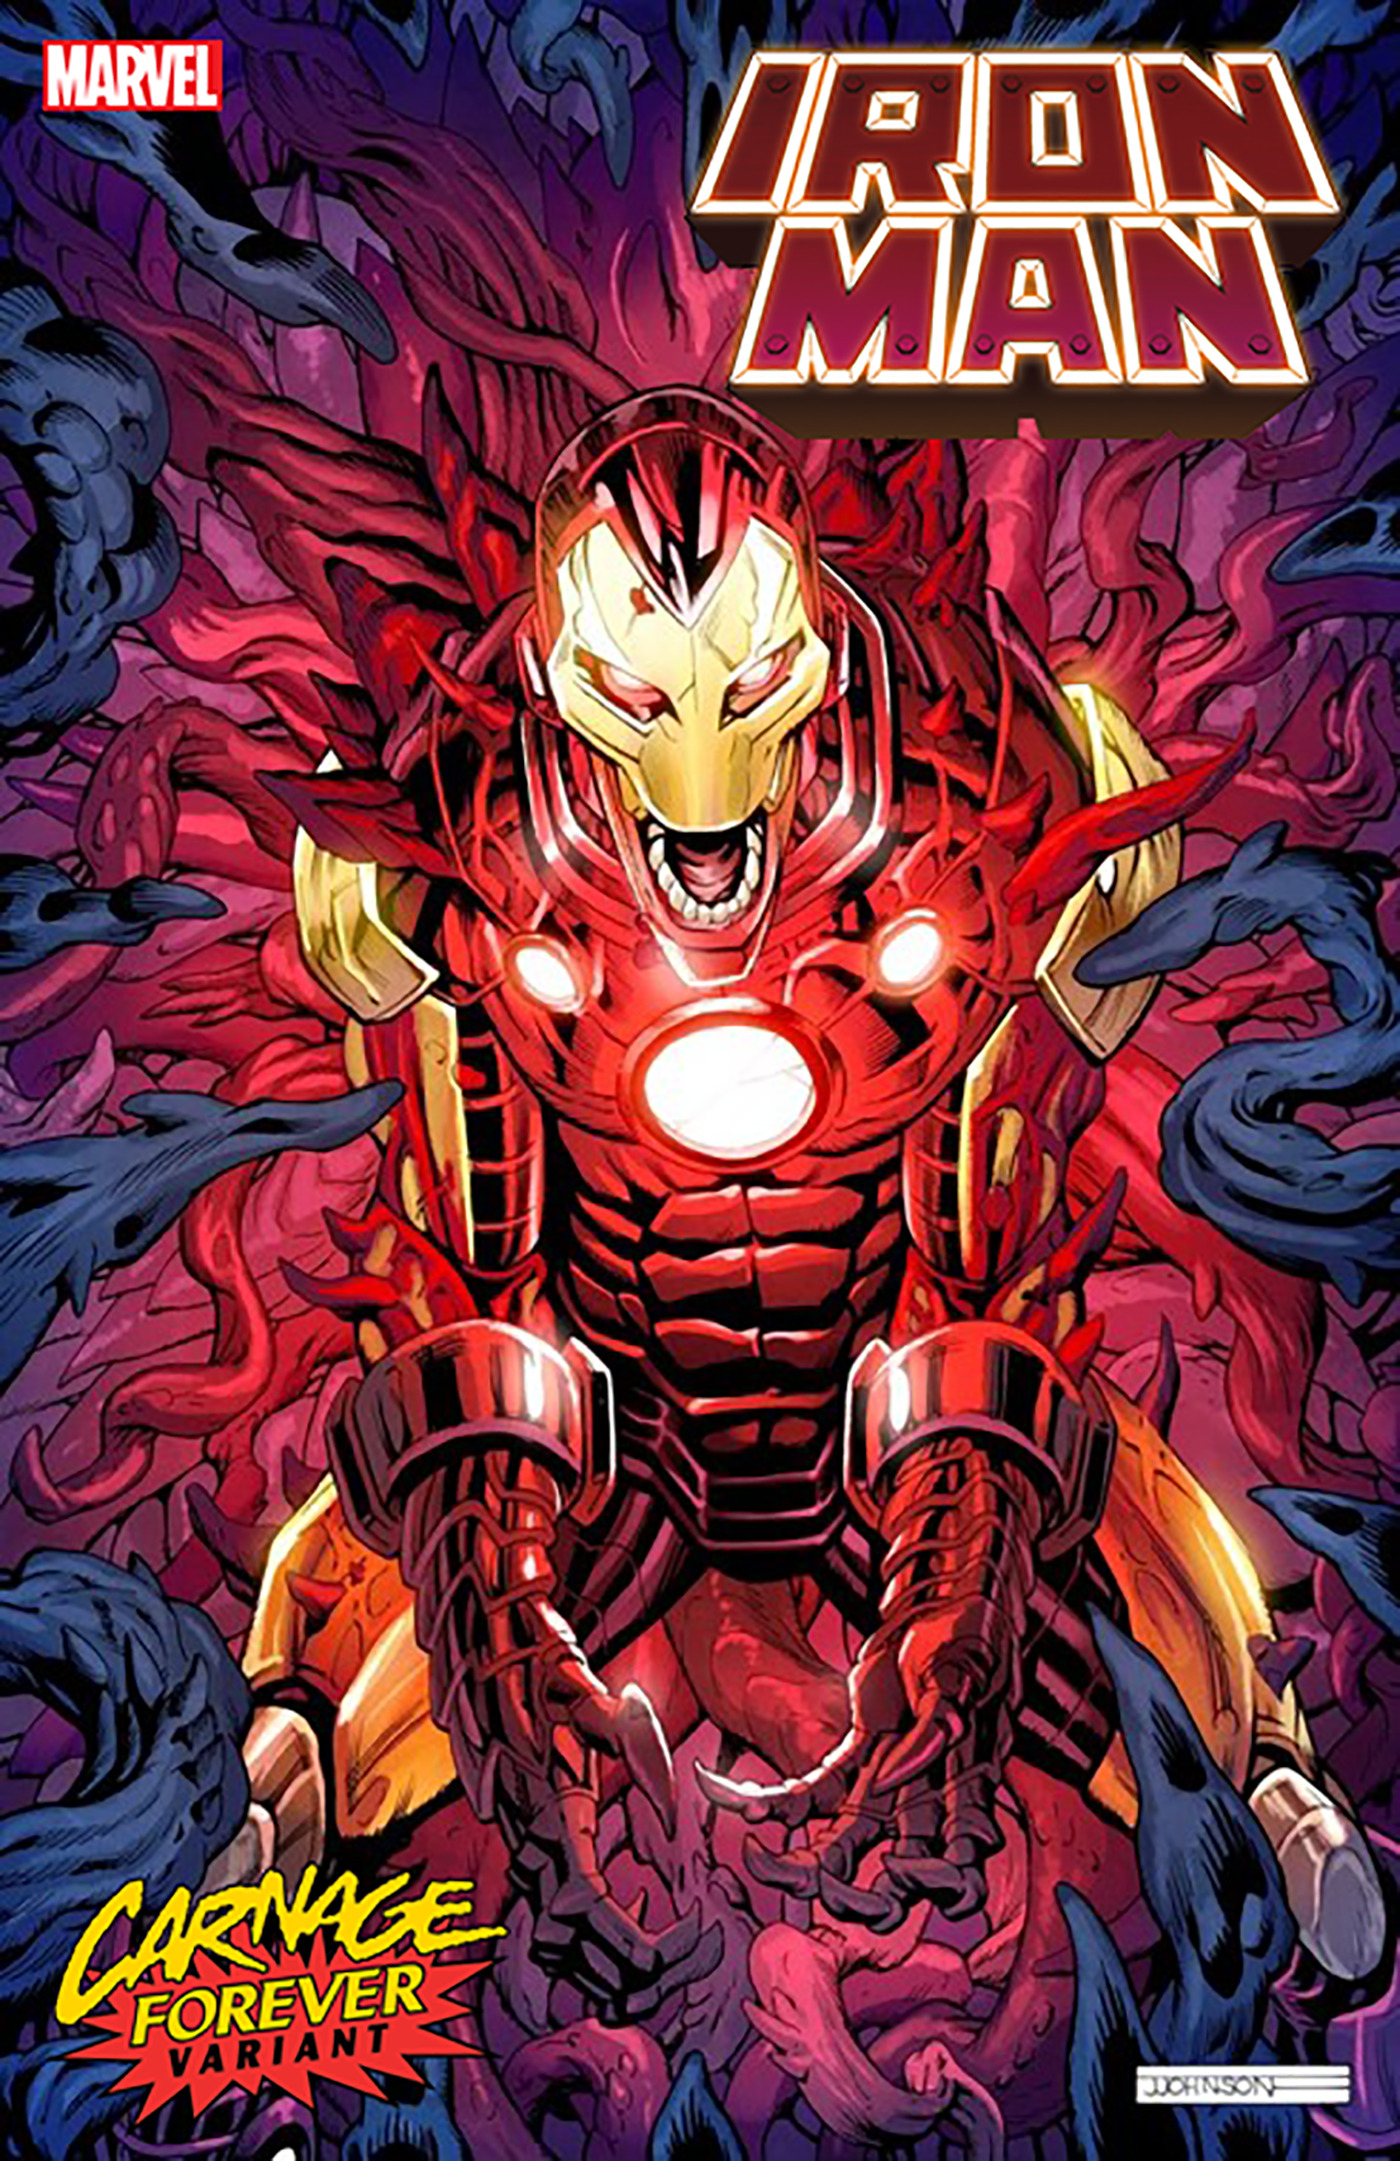 Iron Man #18 Jeff Johnson Carnage Forever Variant (2020)